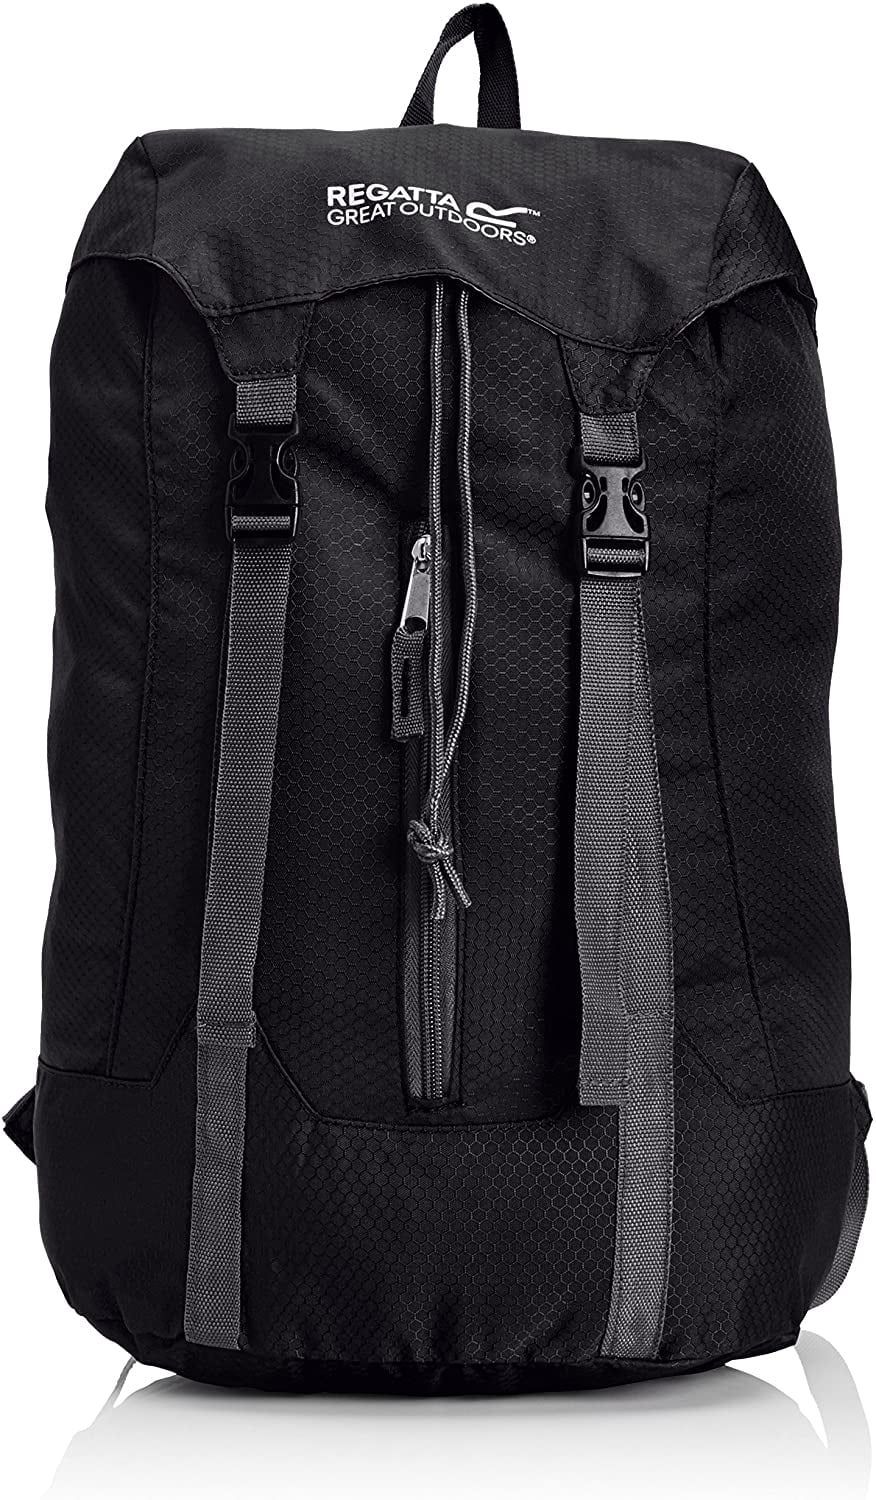 Rucksack Camping Hiking Gym Outdoor Trip Travel Daysack Bag Backpack Easypack 25 